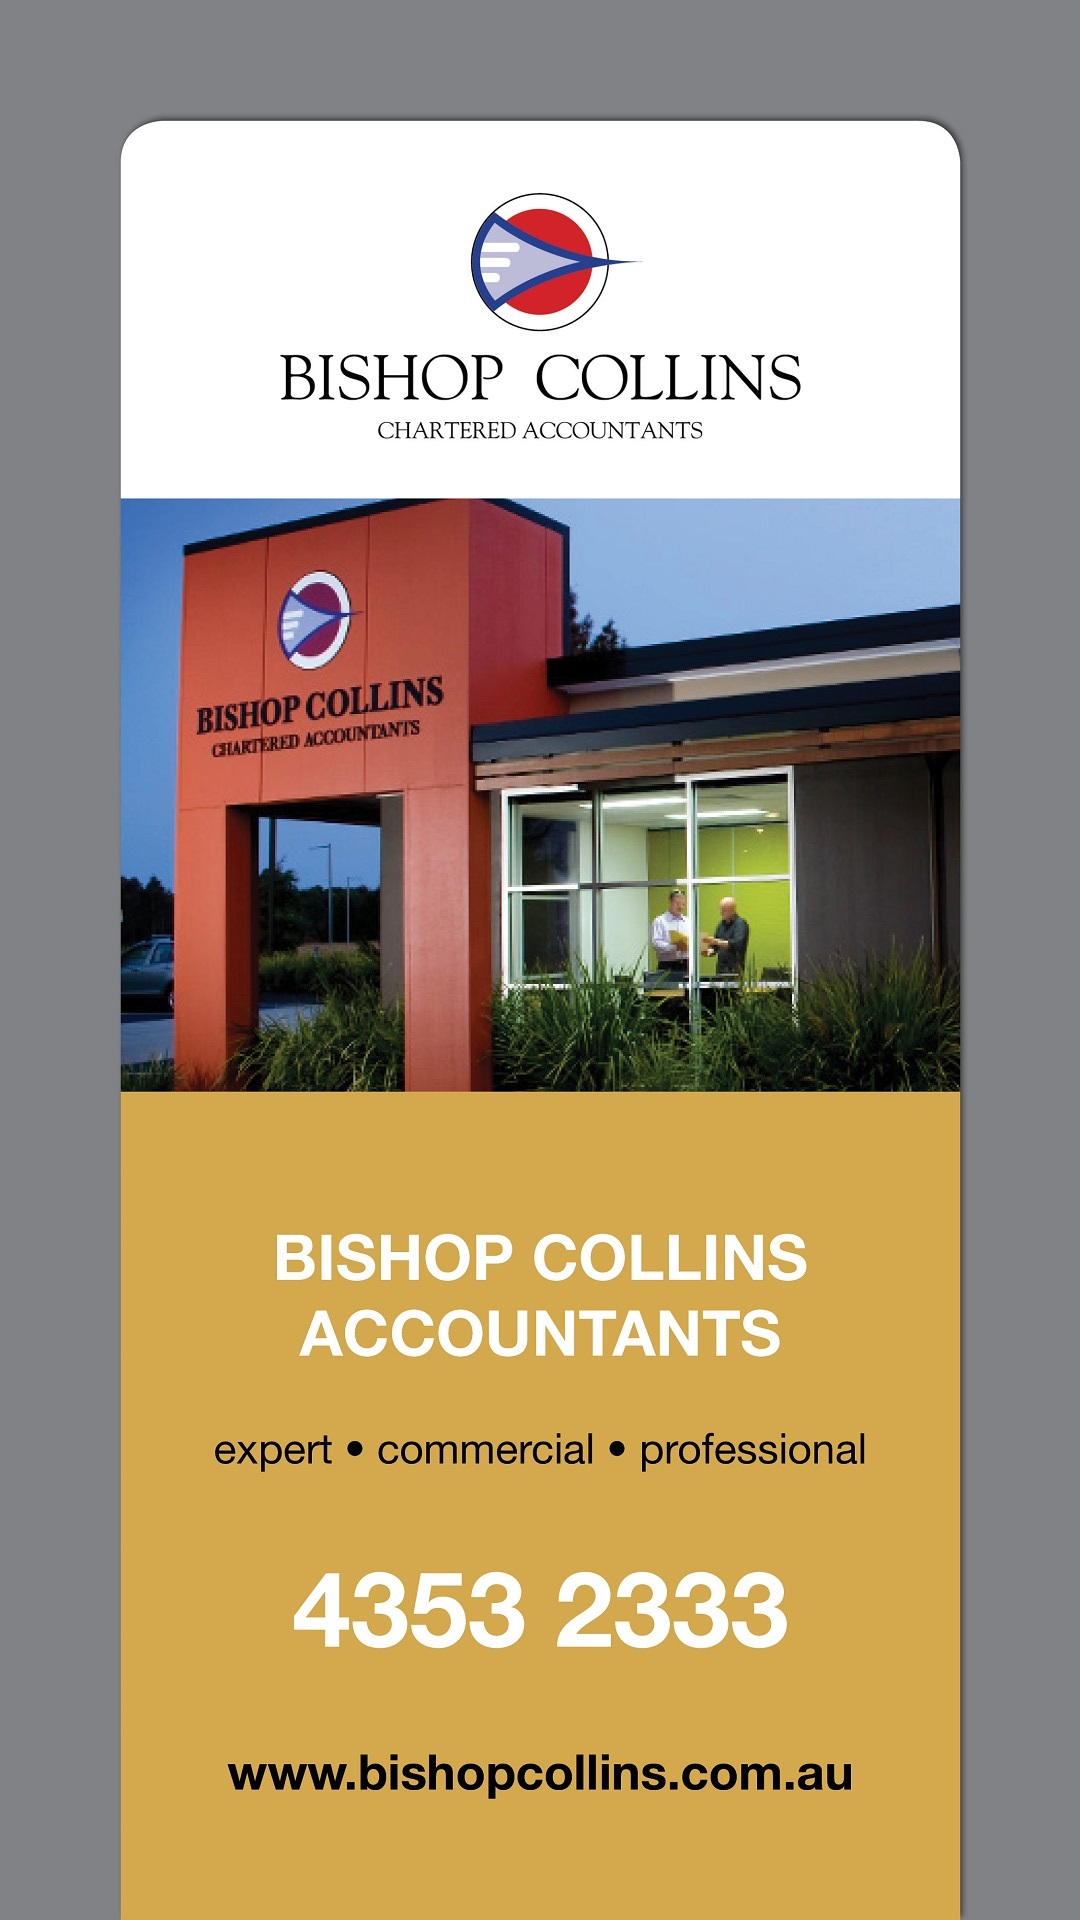 05. Bishop Collins